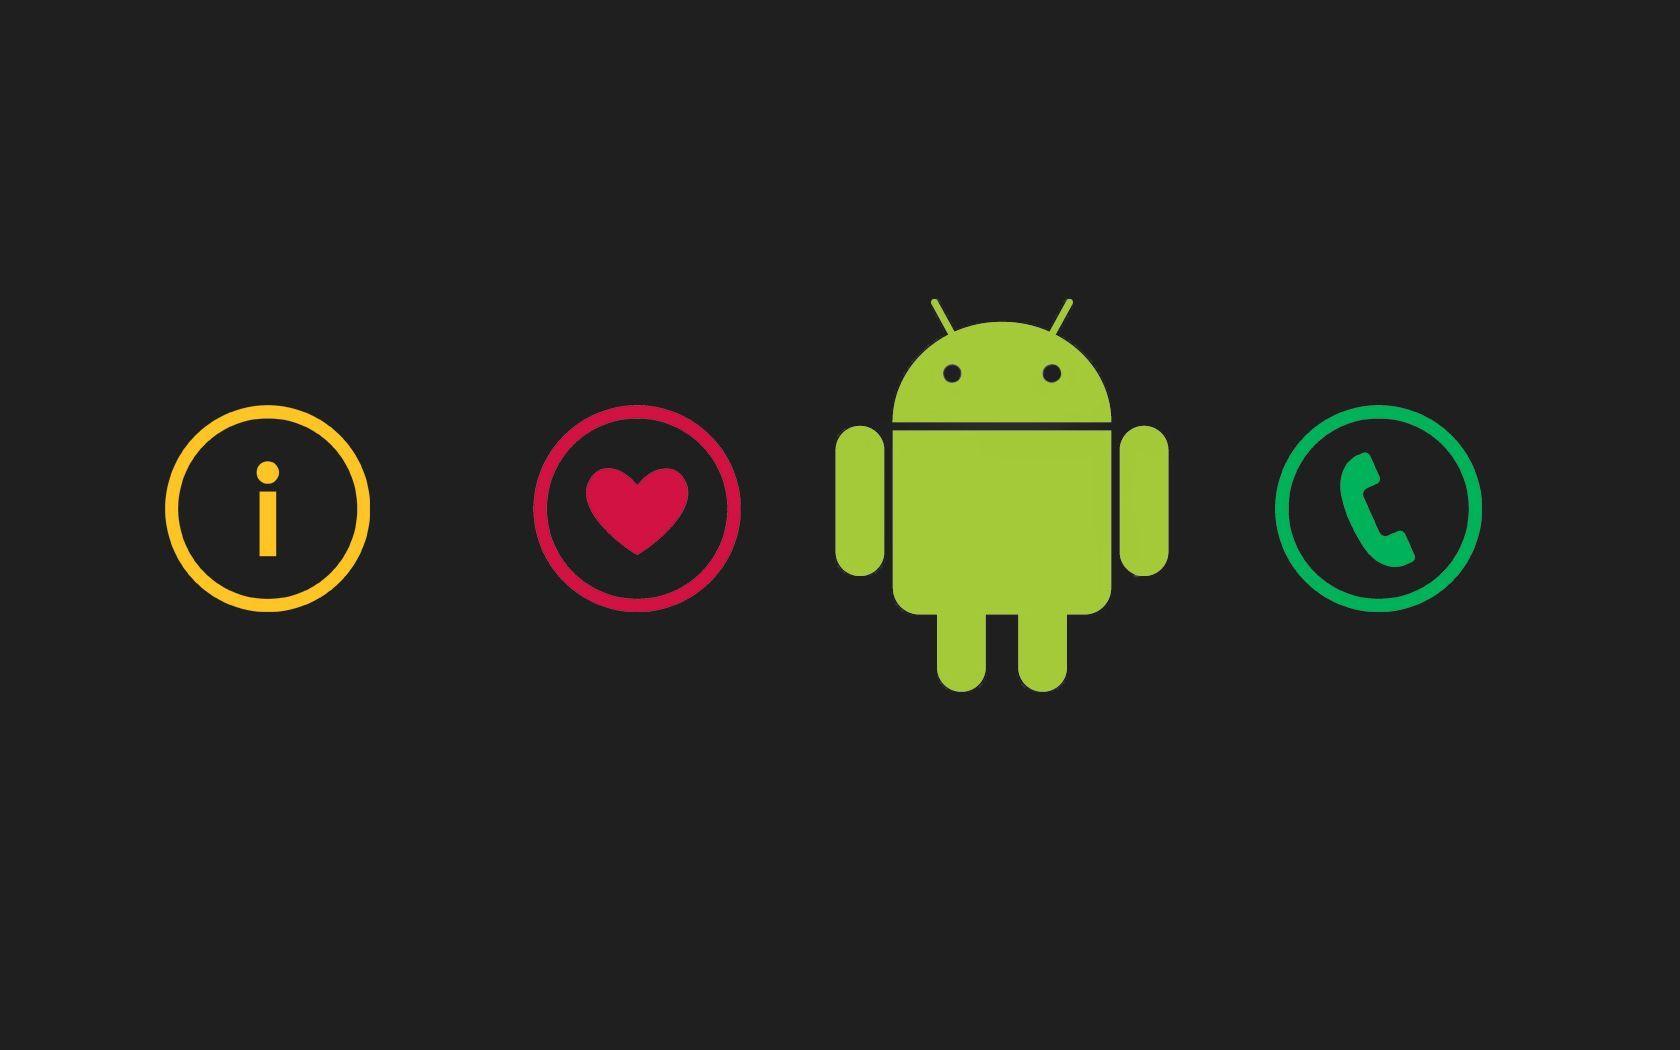 Wallpaper For > Android Logo Wallpaper For Mobile